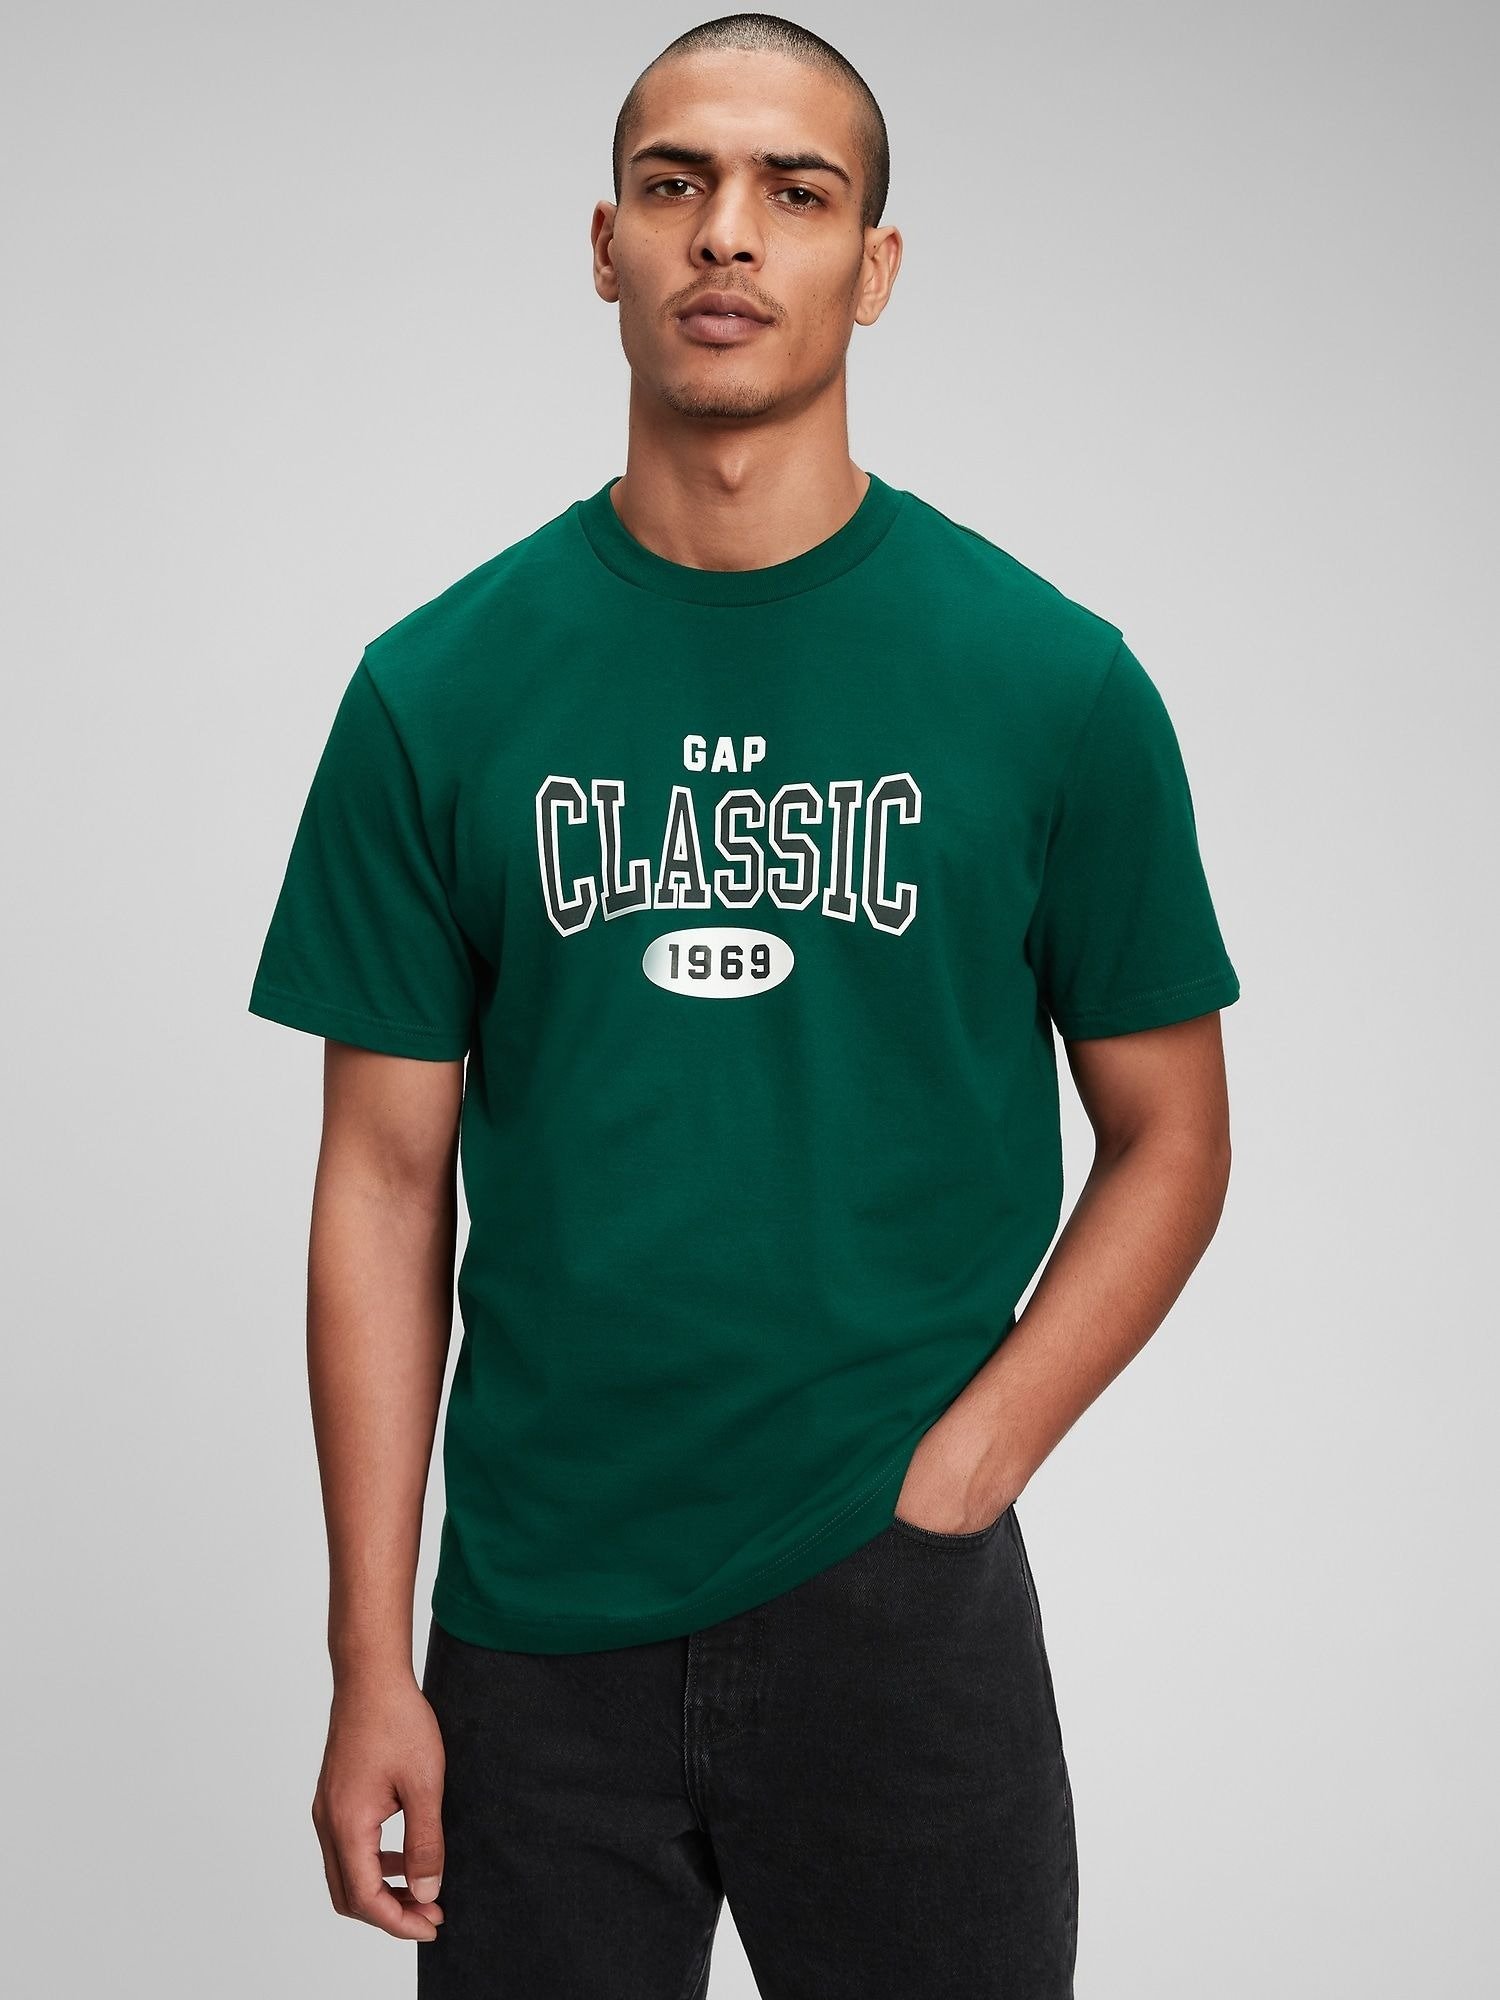 Gap Classic 1969 Logo T-Shirt product image